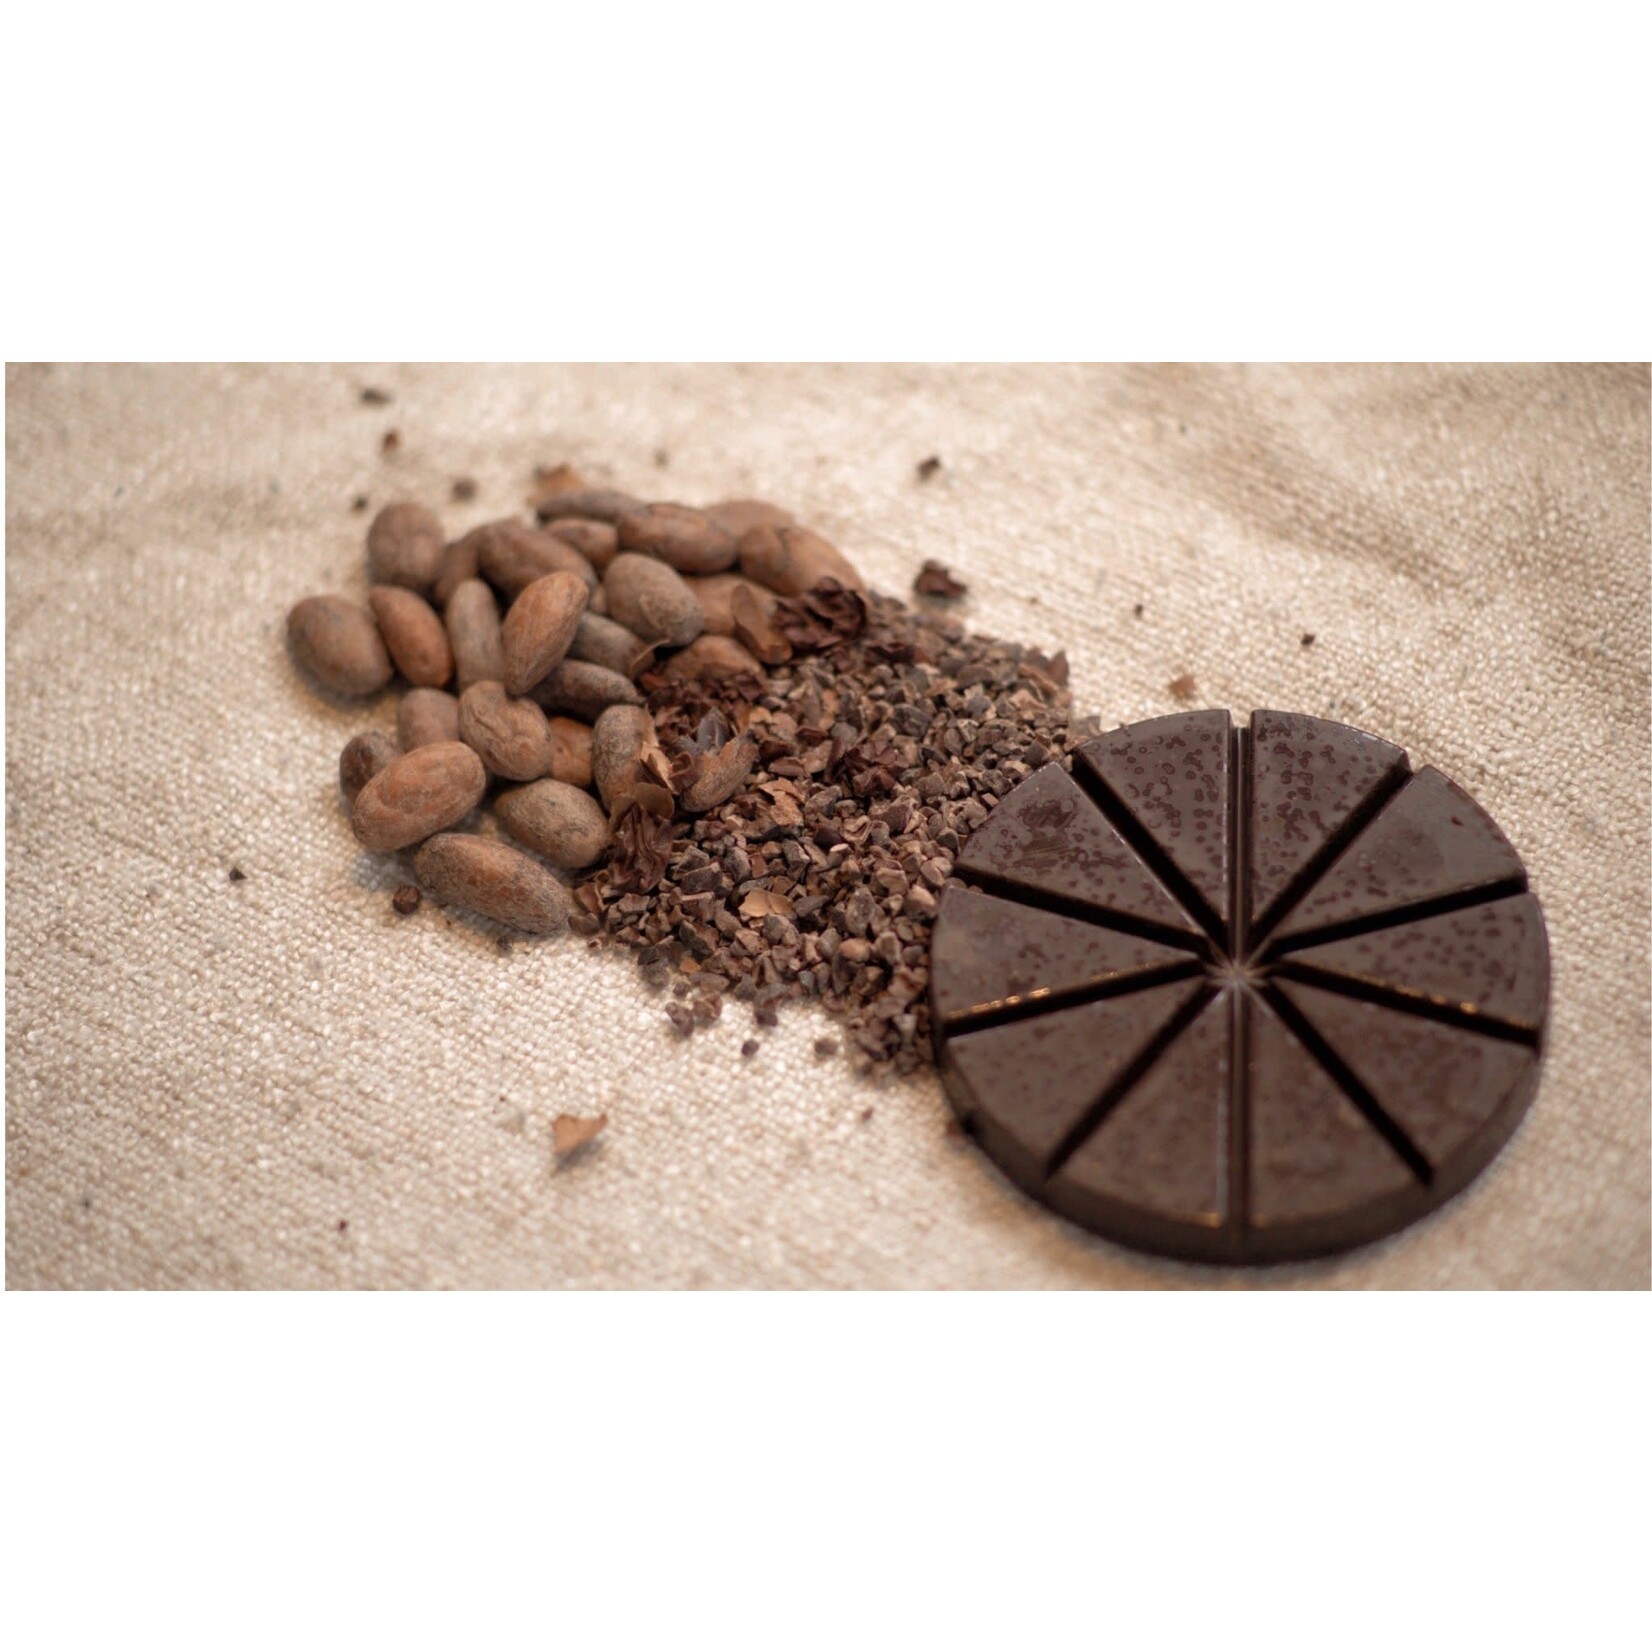 Herbal Cacao 100% PURE-RAW-CEREMONIAL GRADE CACAO "Natural"